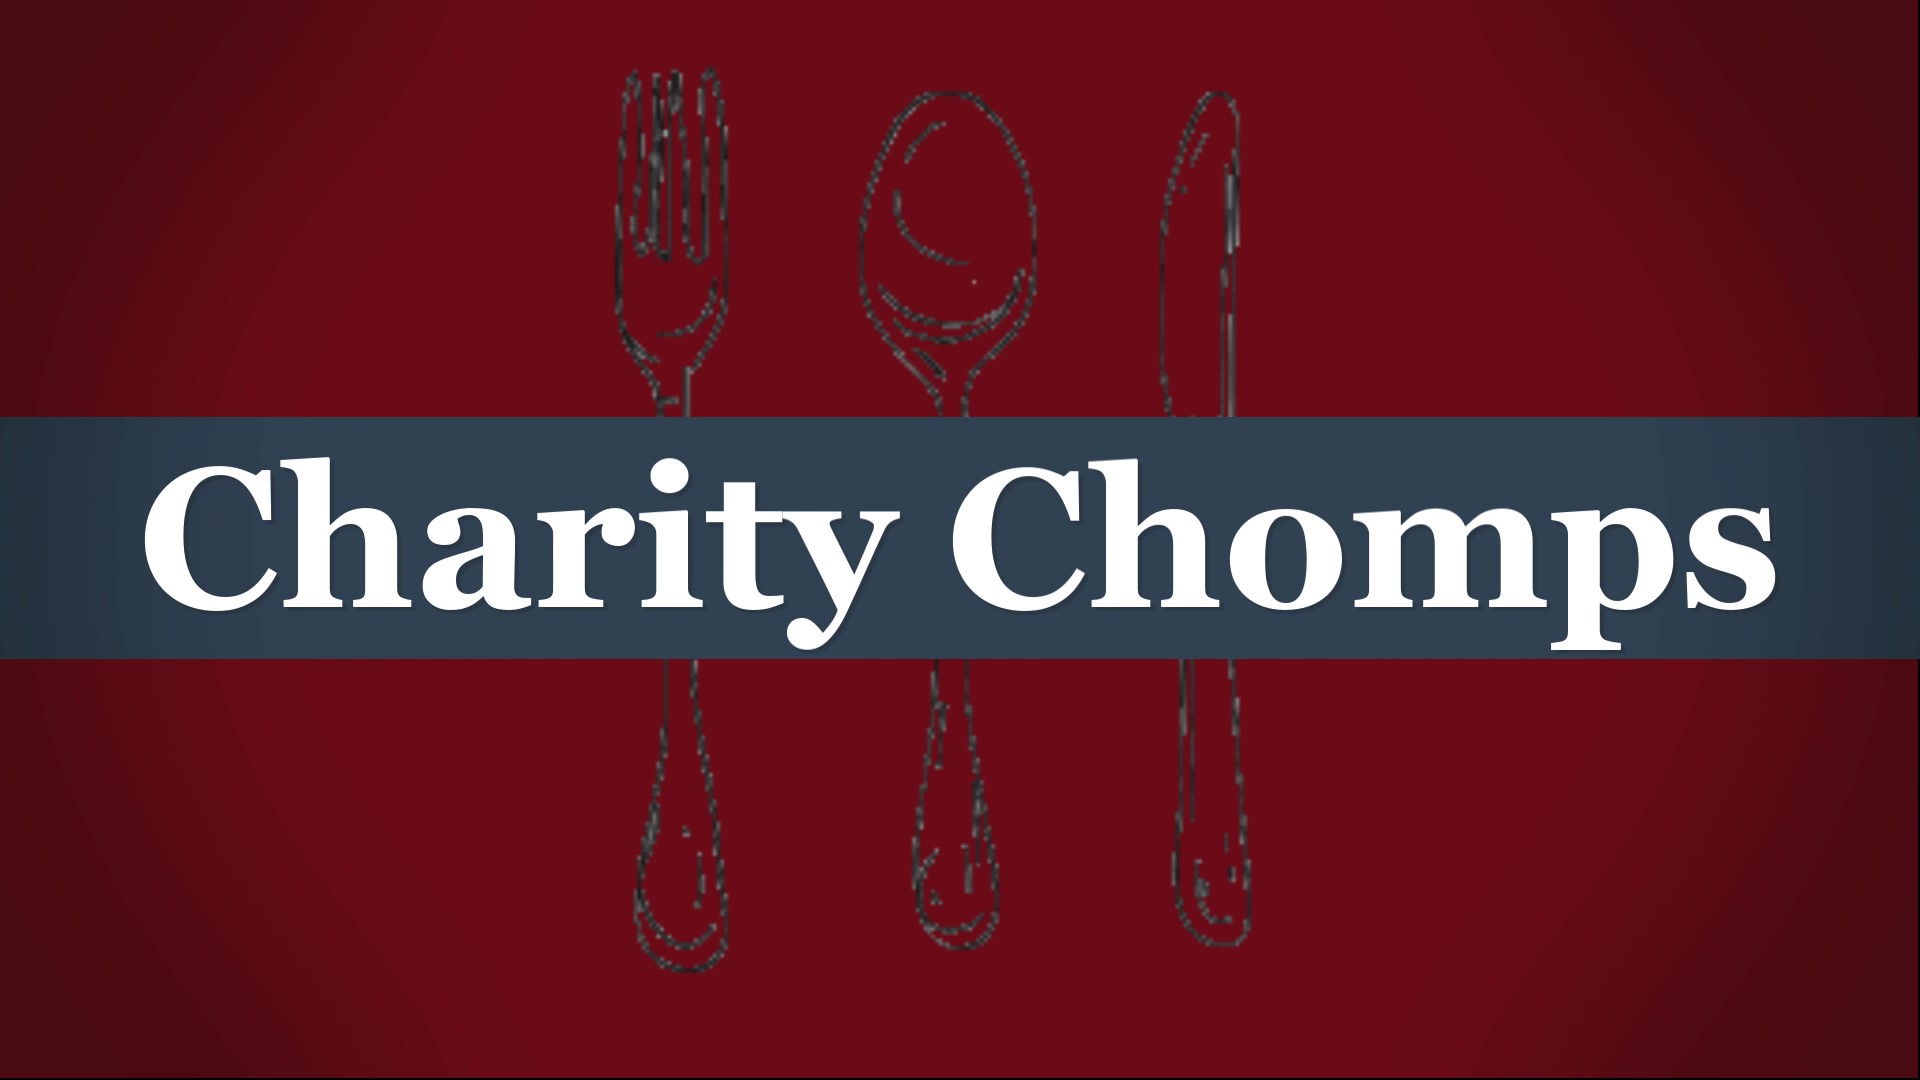 Charity Chomp - Redstone gci